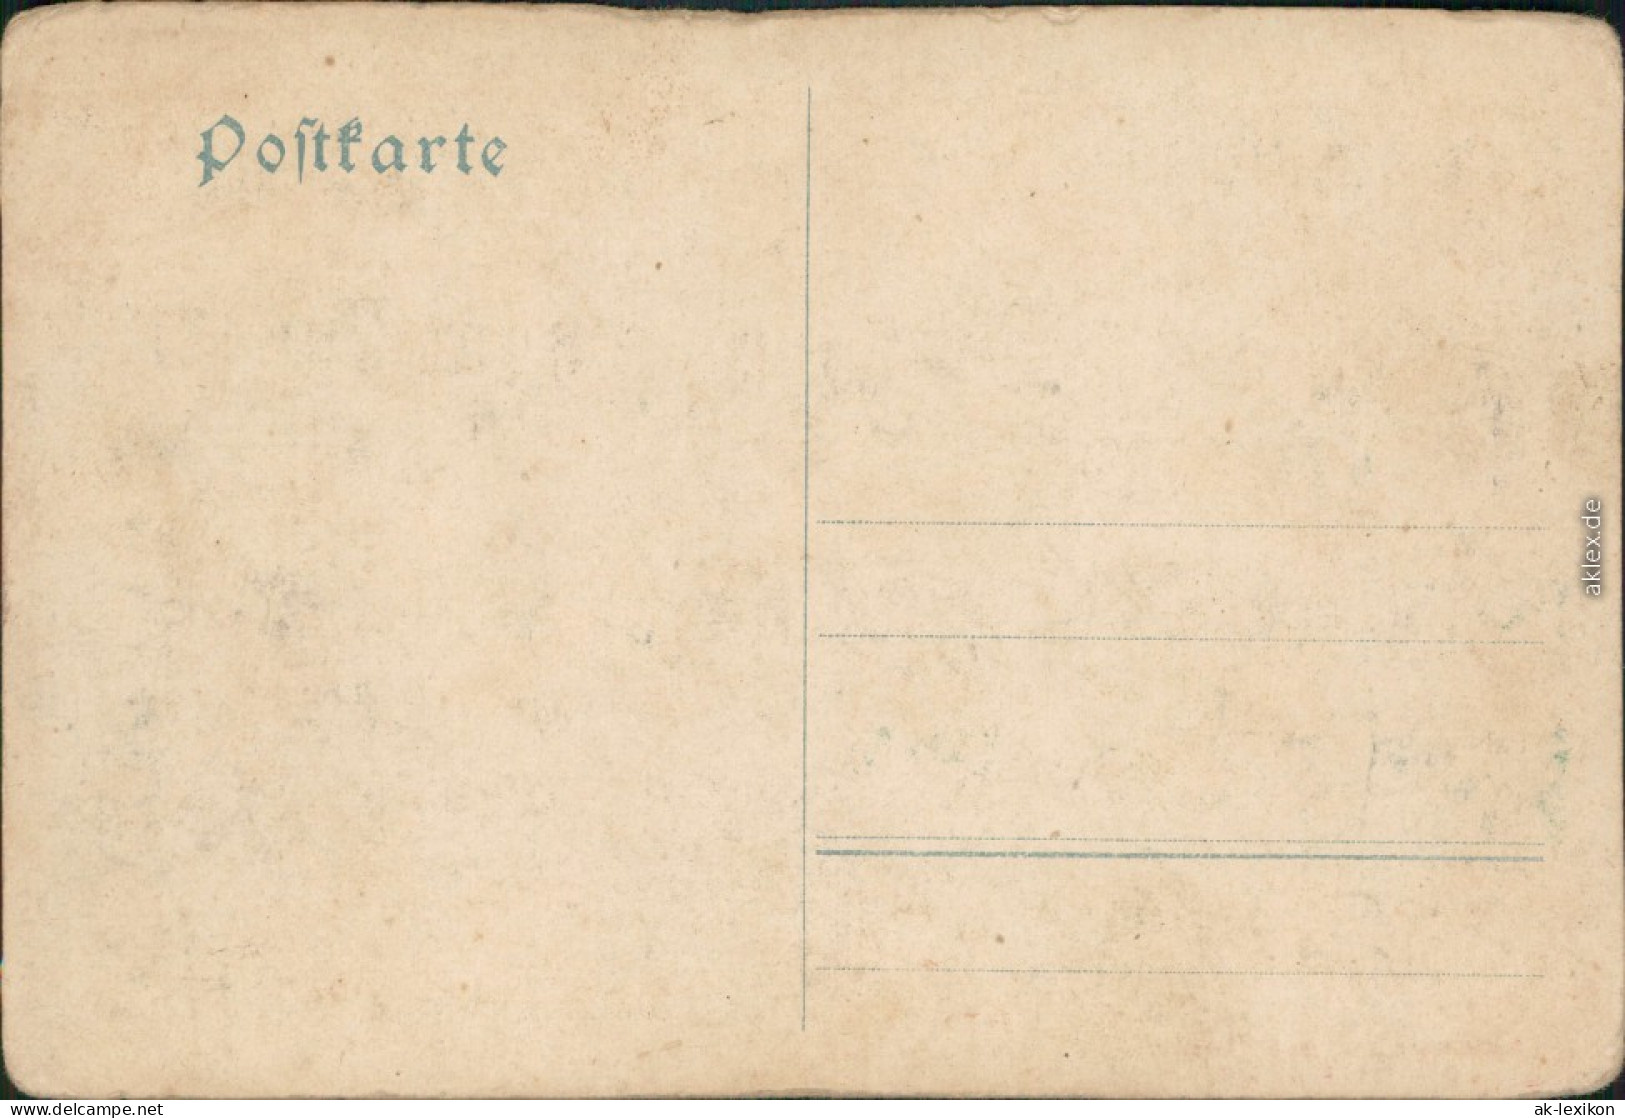 Ansichtskarte  De Drei Ugelickr - Liedkarte, Erzgebirge 1907  - Music